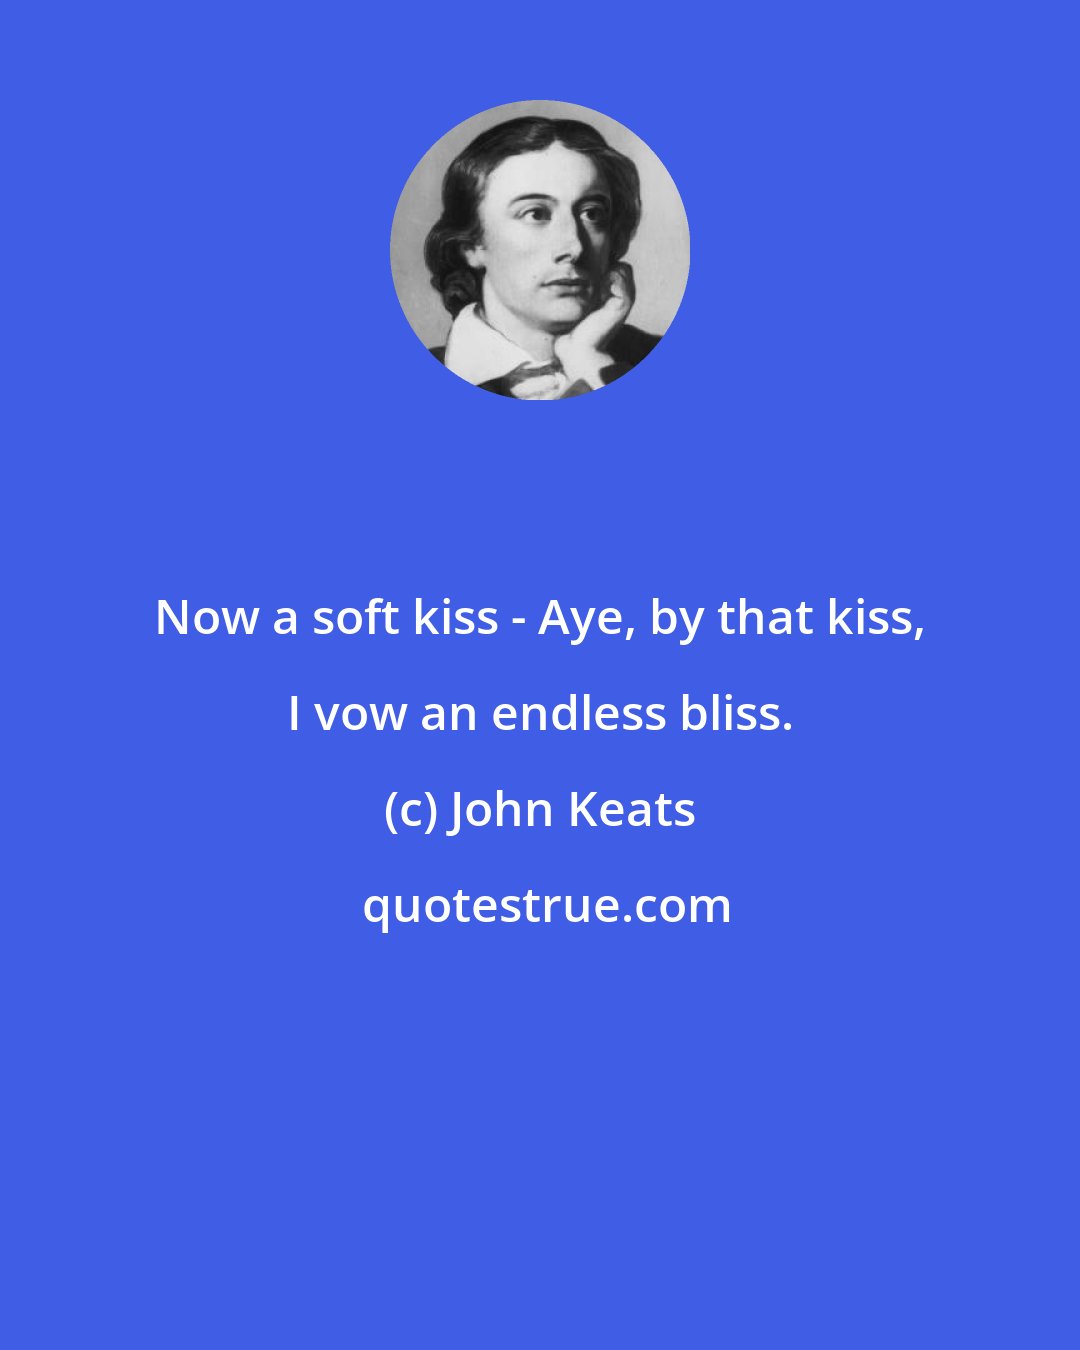 John Keats: Now a soft kiss - Aye, by that kiss, I vow an endless bliss.